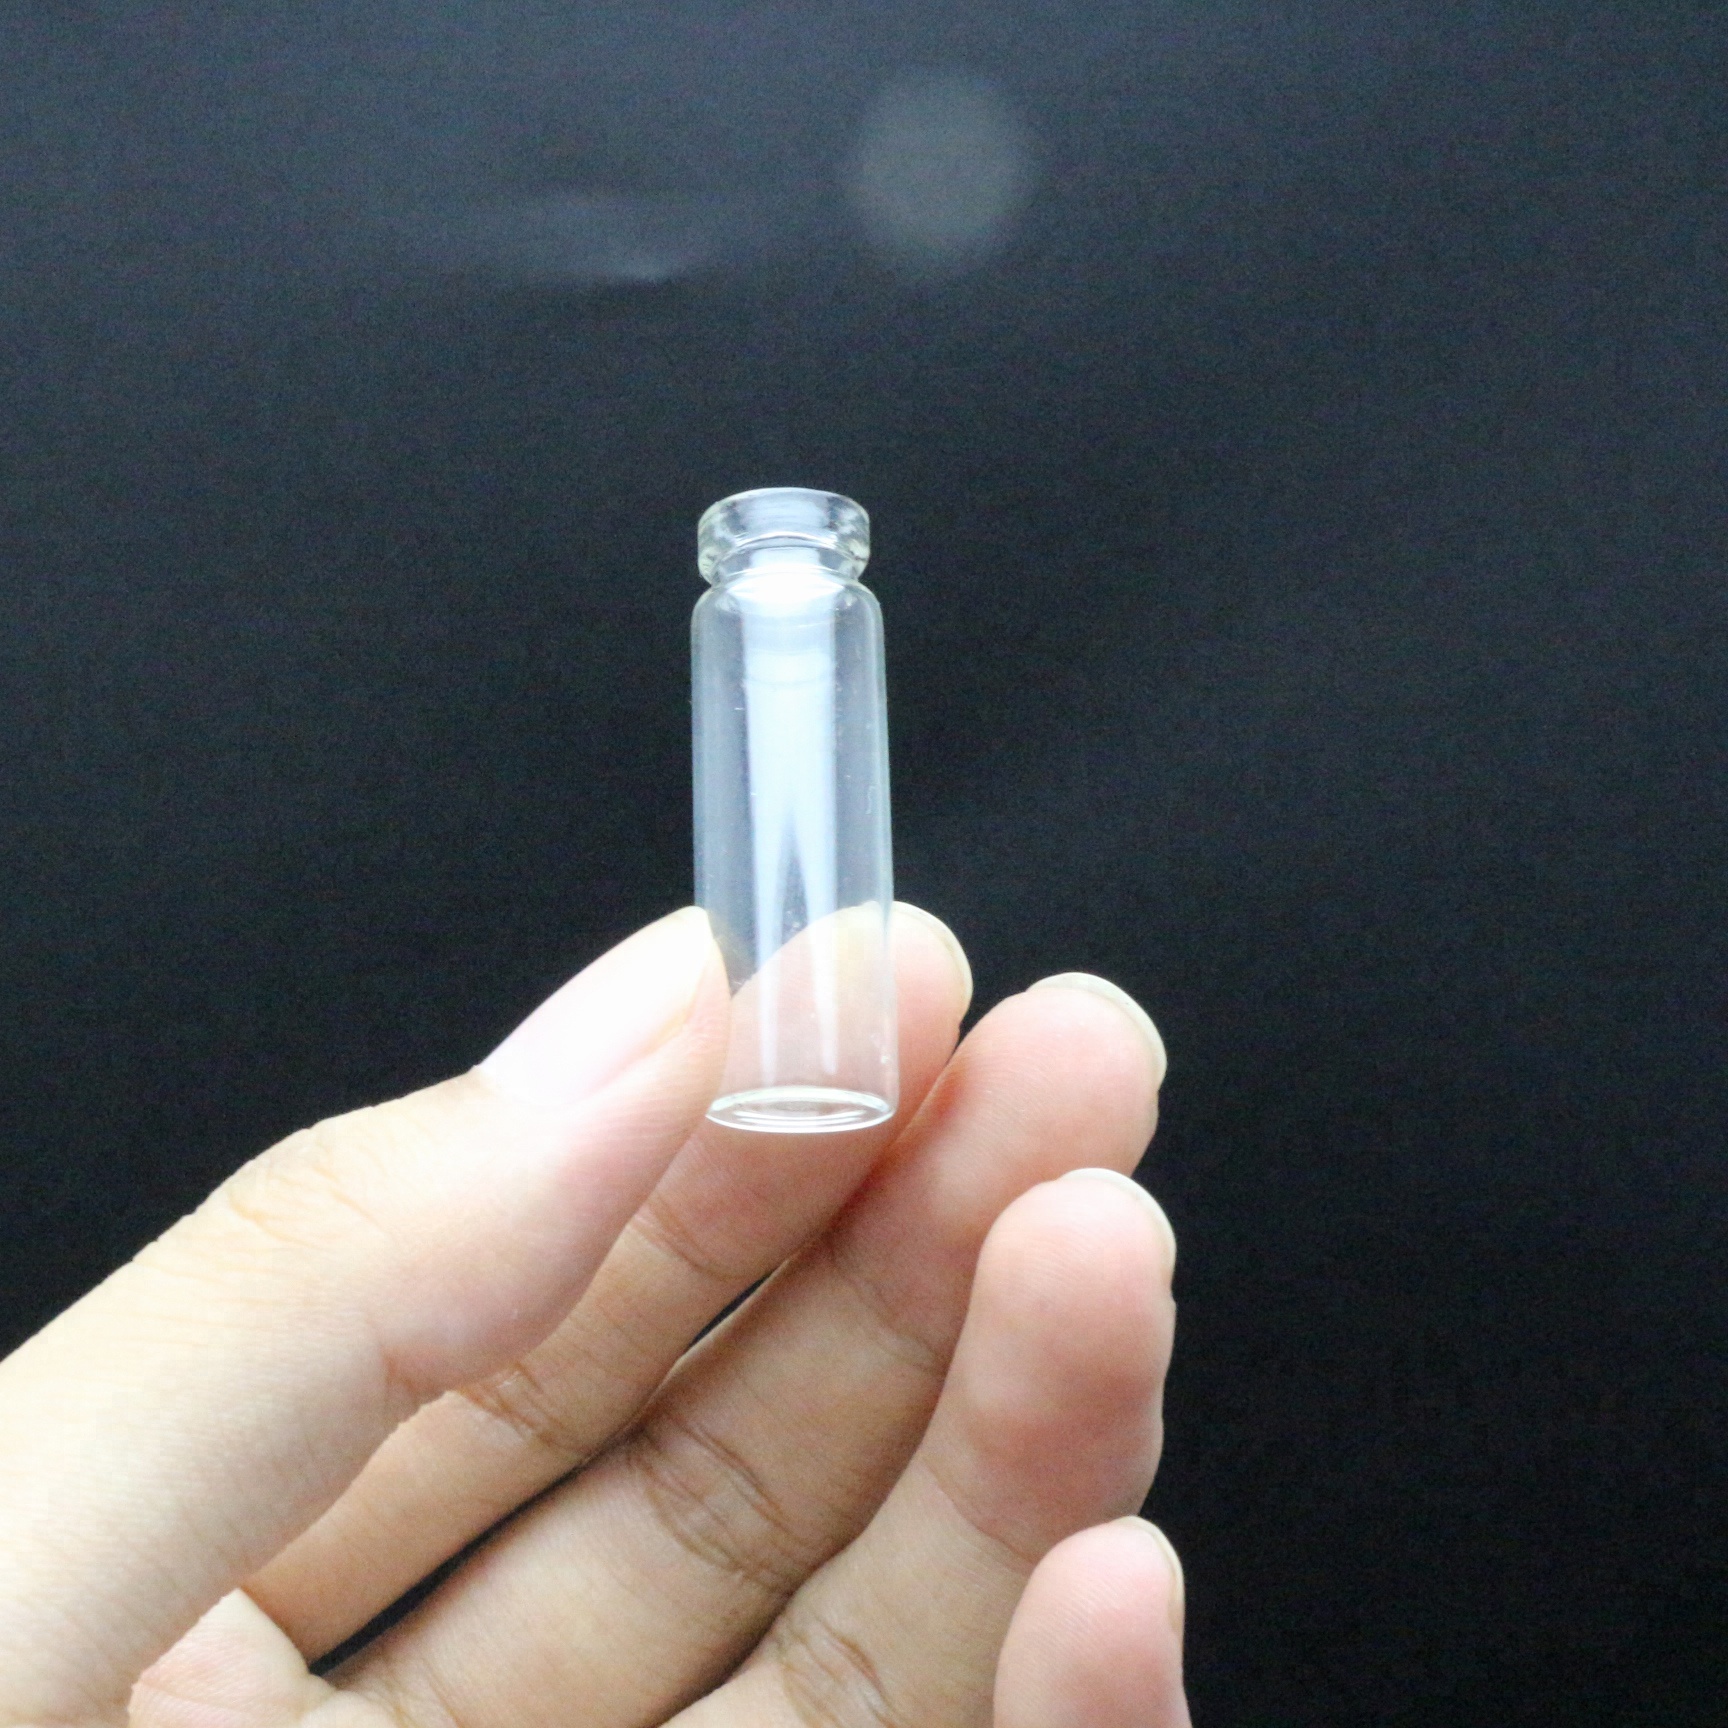 1ml 2ml 3ml 4ml 5ml 6ml 7ml 8ml 9ml 10ml 15ml 20ml 25ml 30ml 100ml 150ml 50ml heat resistant glass test tube with screw cap